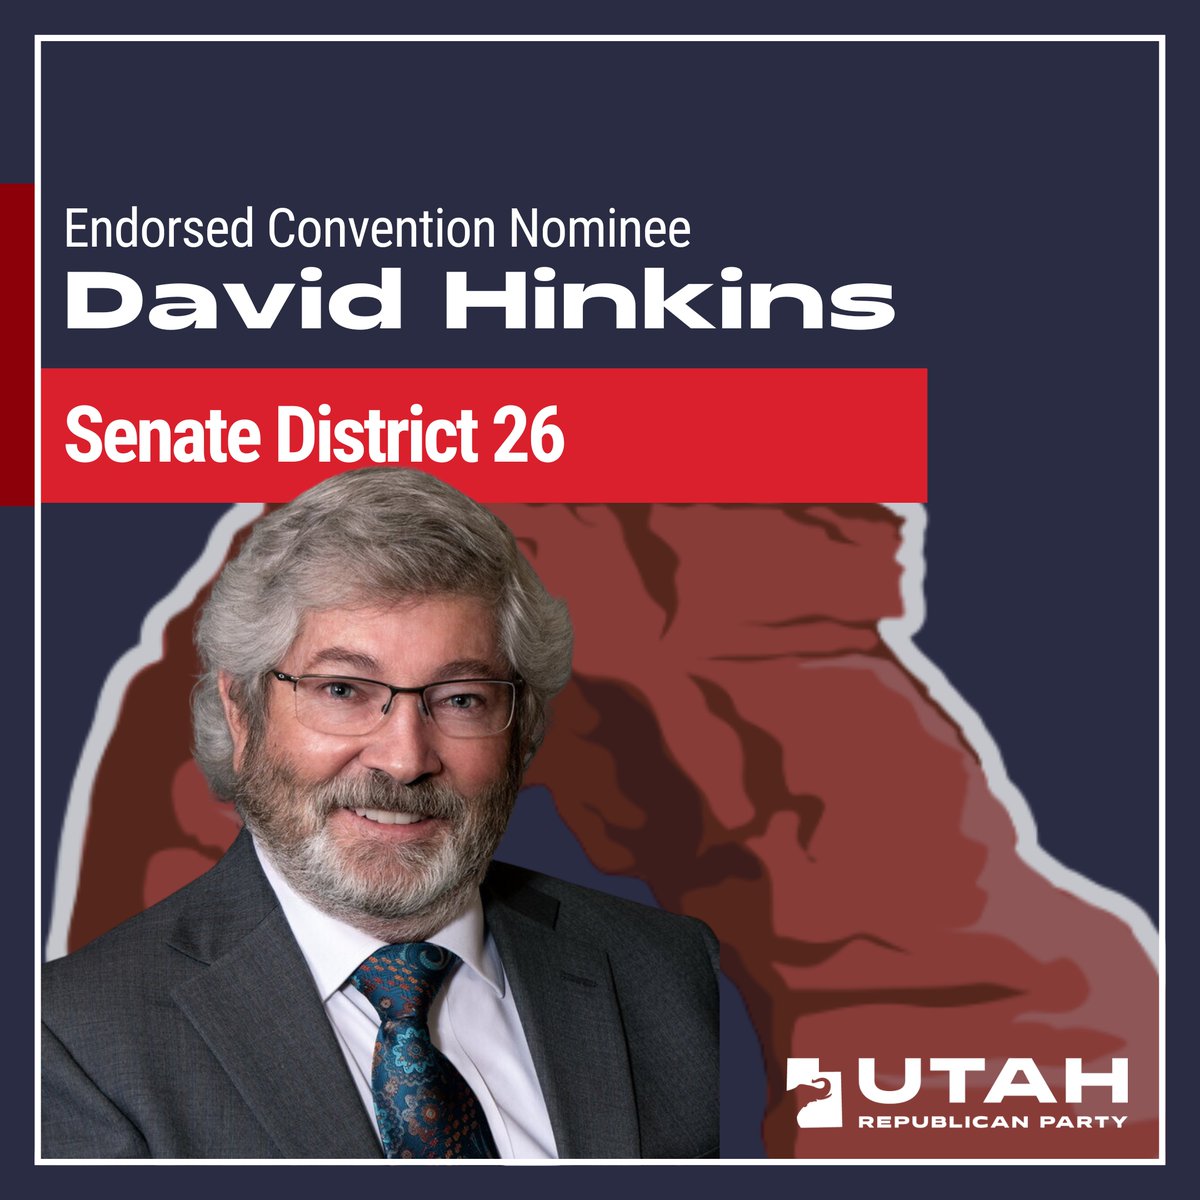 David Hinkins is the UT GOP's Endorsed Convention Nominee for Senate District 26! Congratulations David!